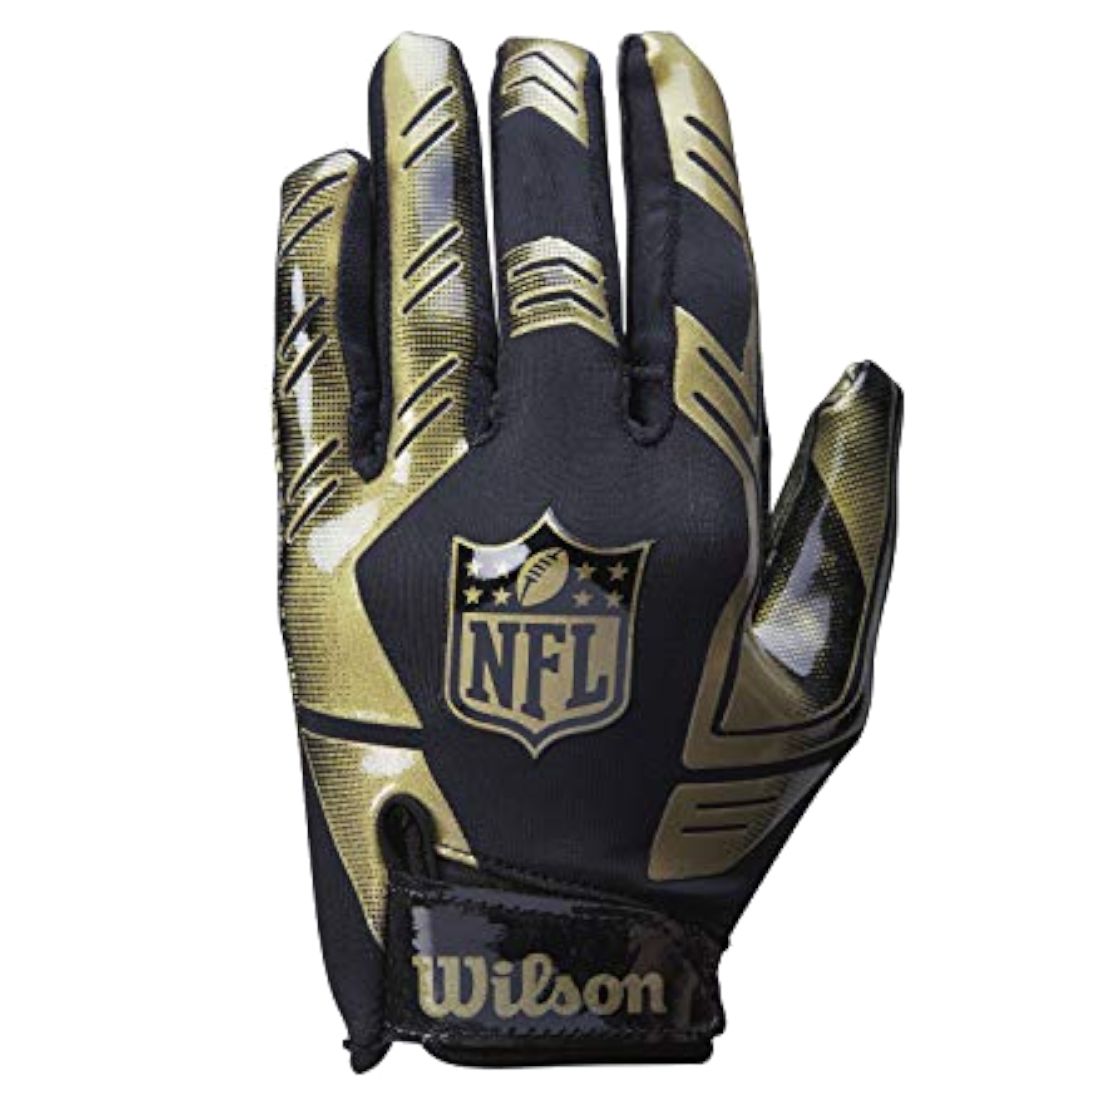 Rukavice Wilson NFL Stretch Fit Receivers Gloves WTF930600M - One size